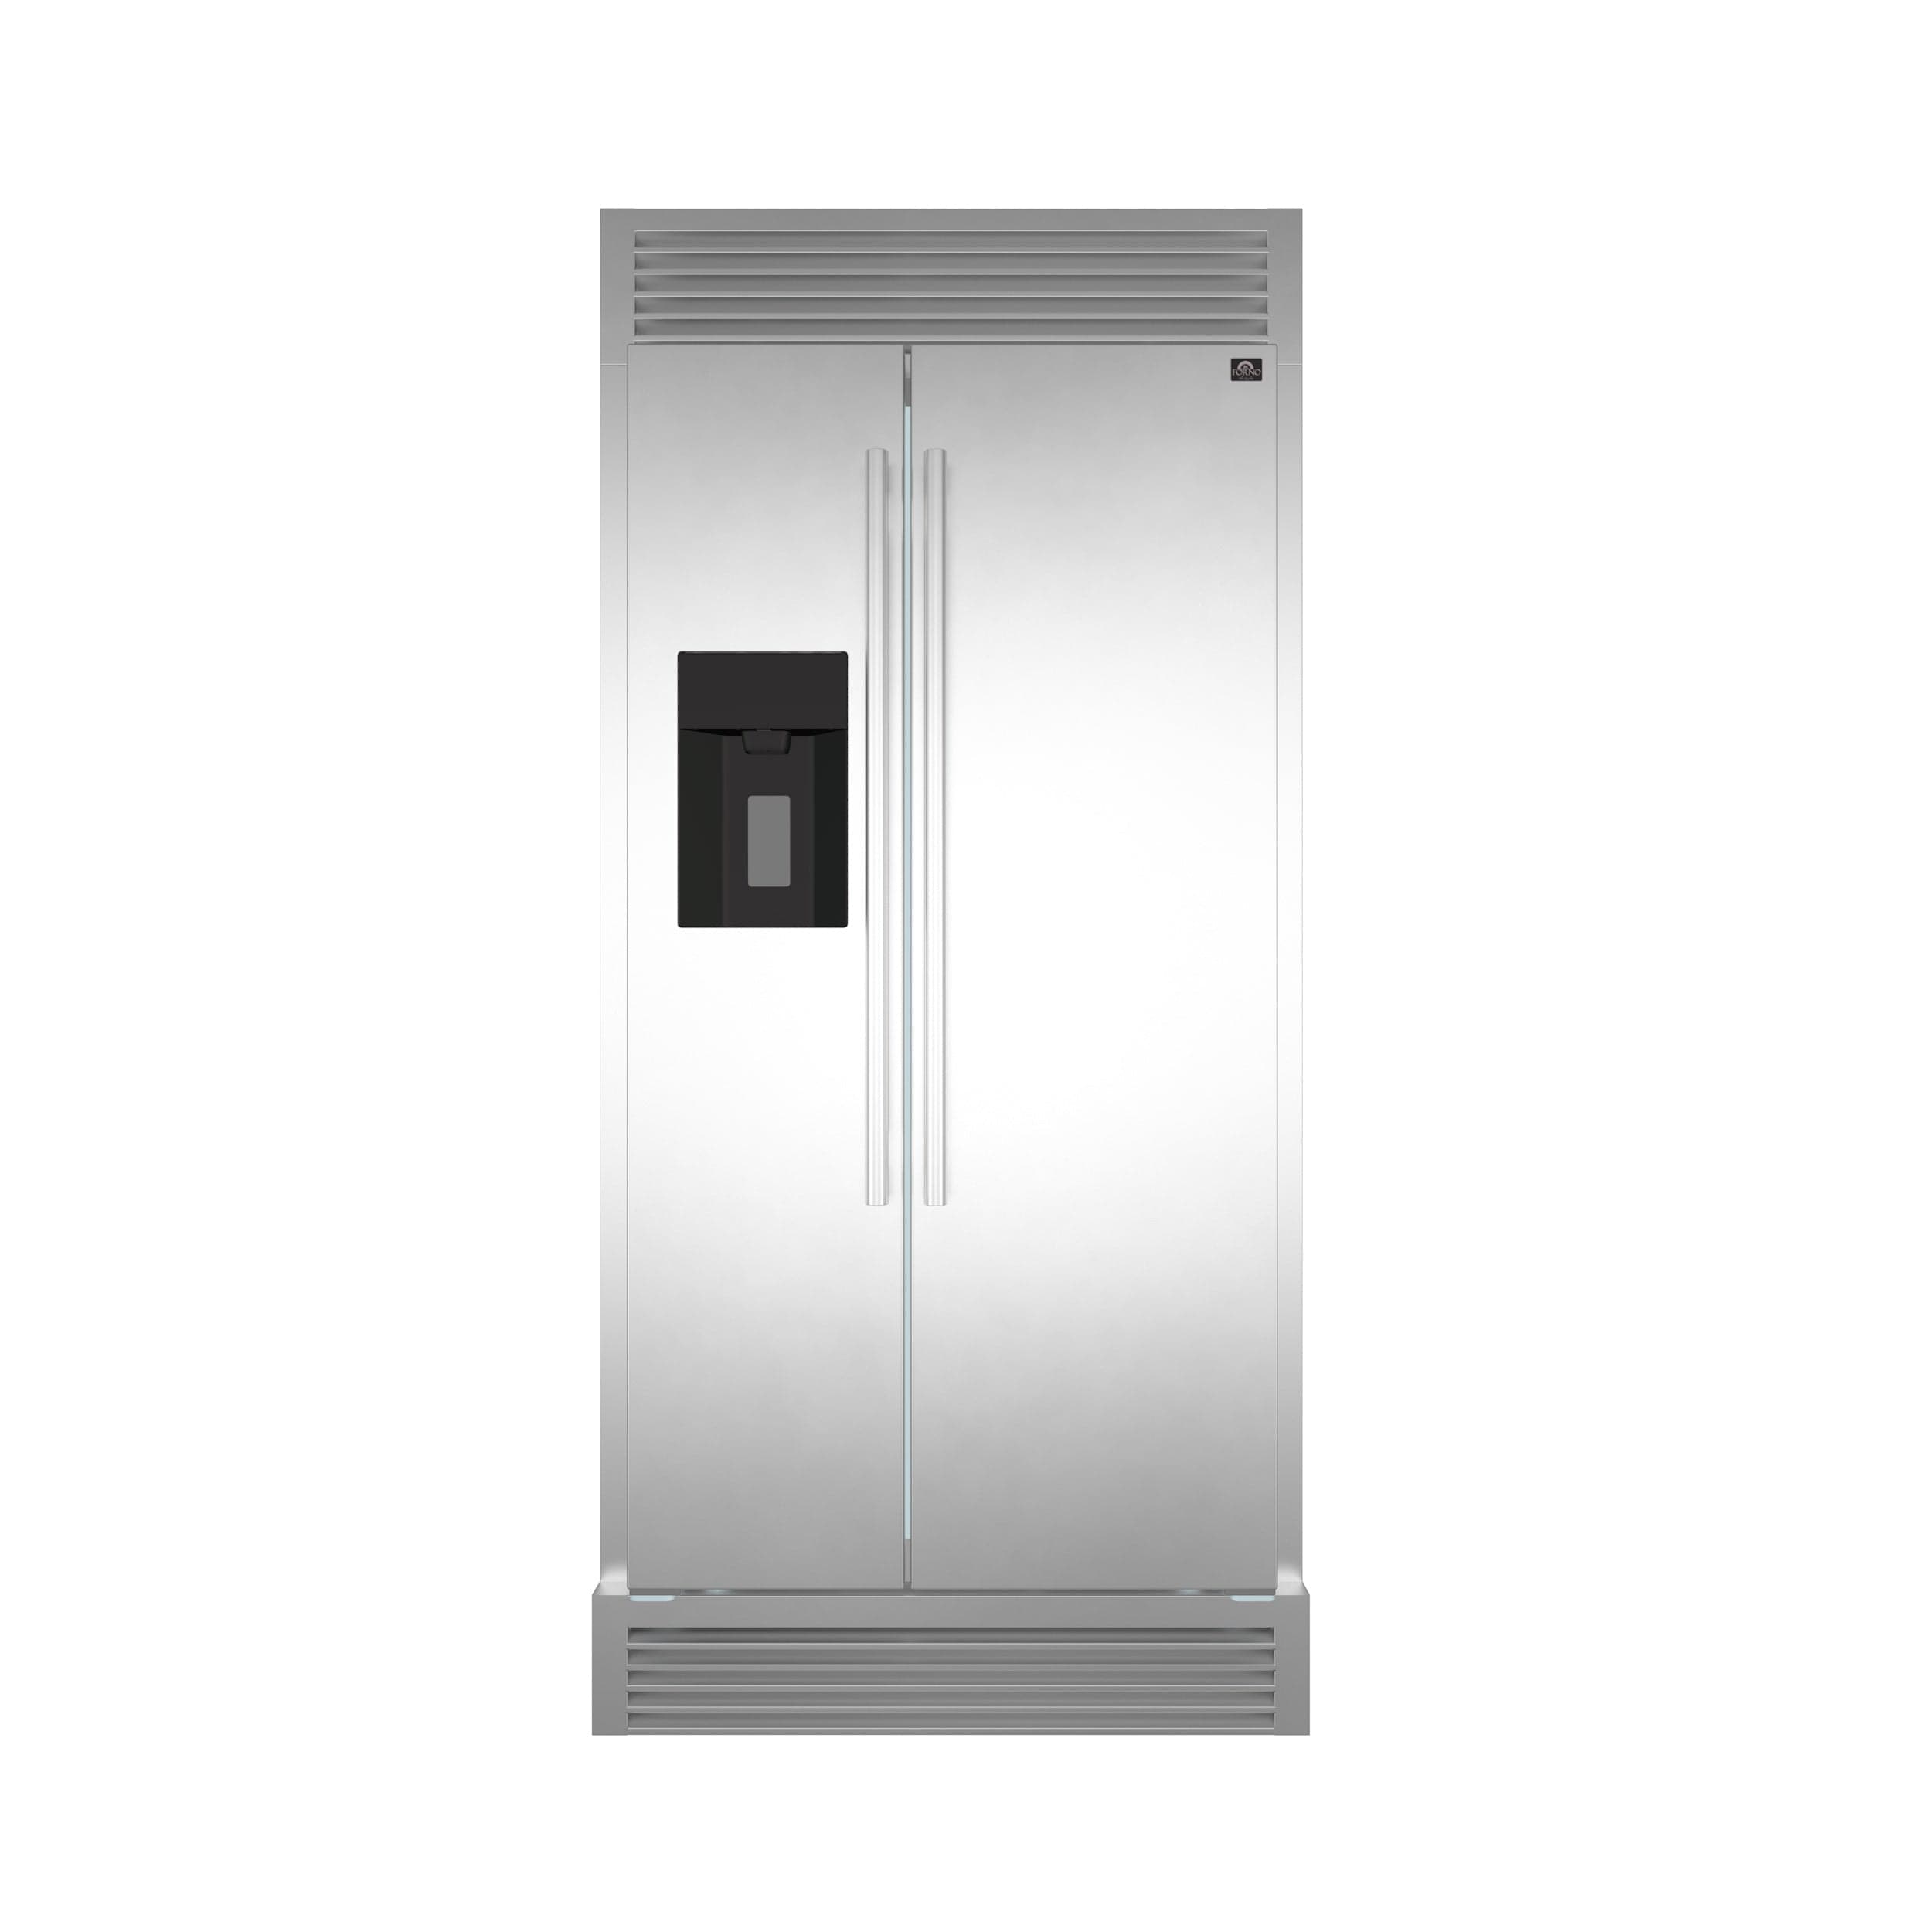 Forno Fratta 36" Side-By-Side Refrigerator With Decorative Grill FFRBI1844-40SG Refrigerators FFRBI1844-40SG Luxury Appliances Direct